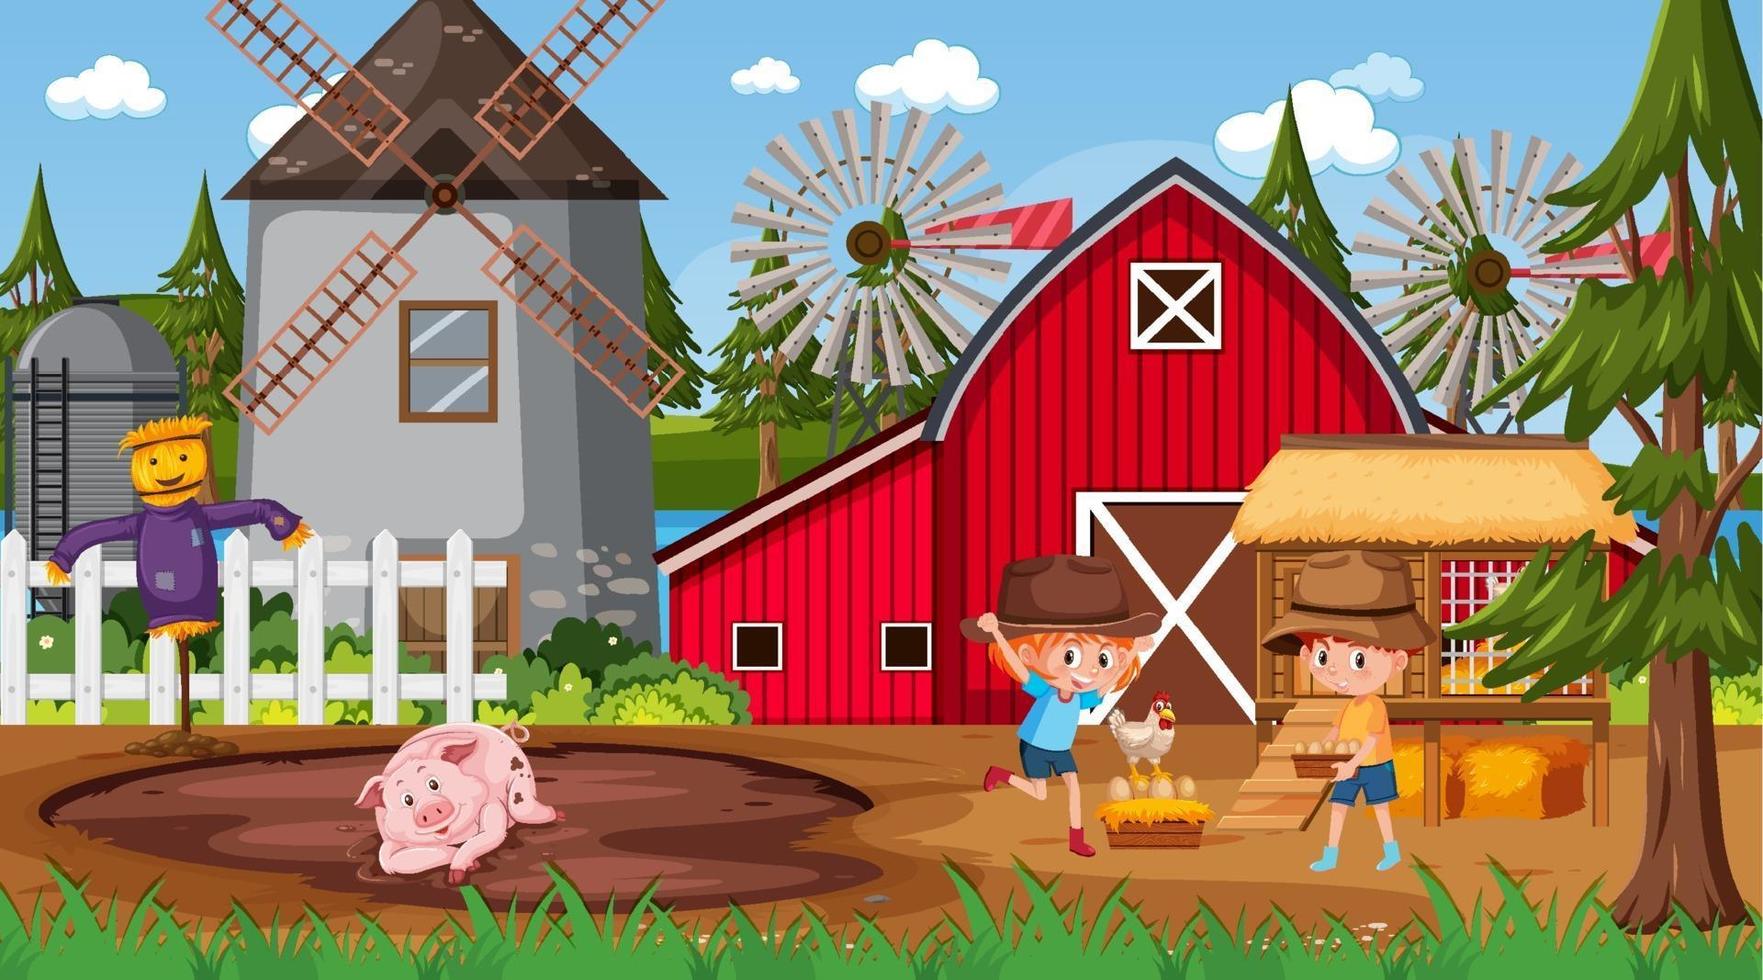 Farm scene with many kids cartoon character and farm animals vector